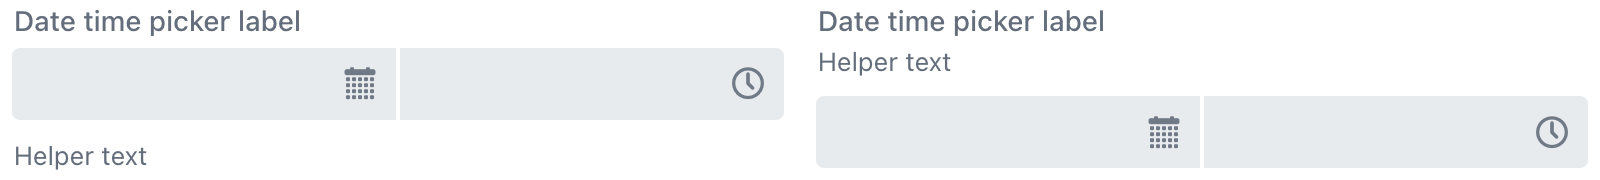 date time picker helper text position